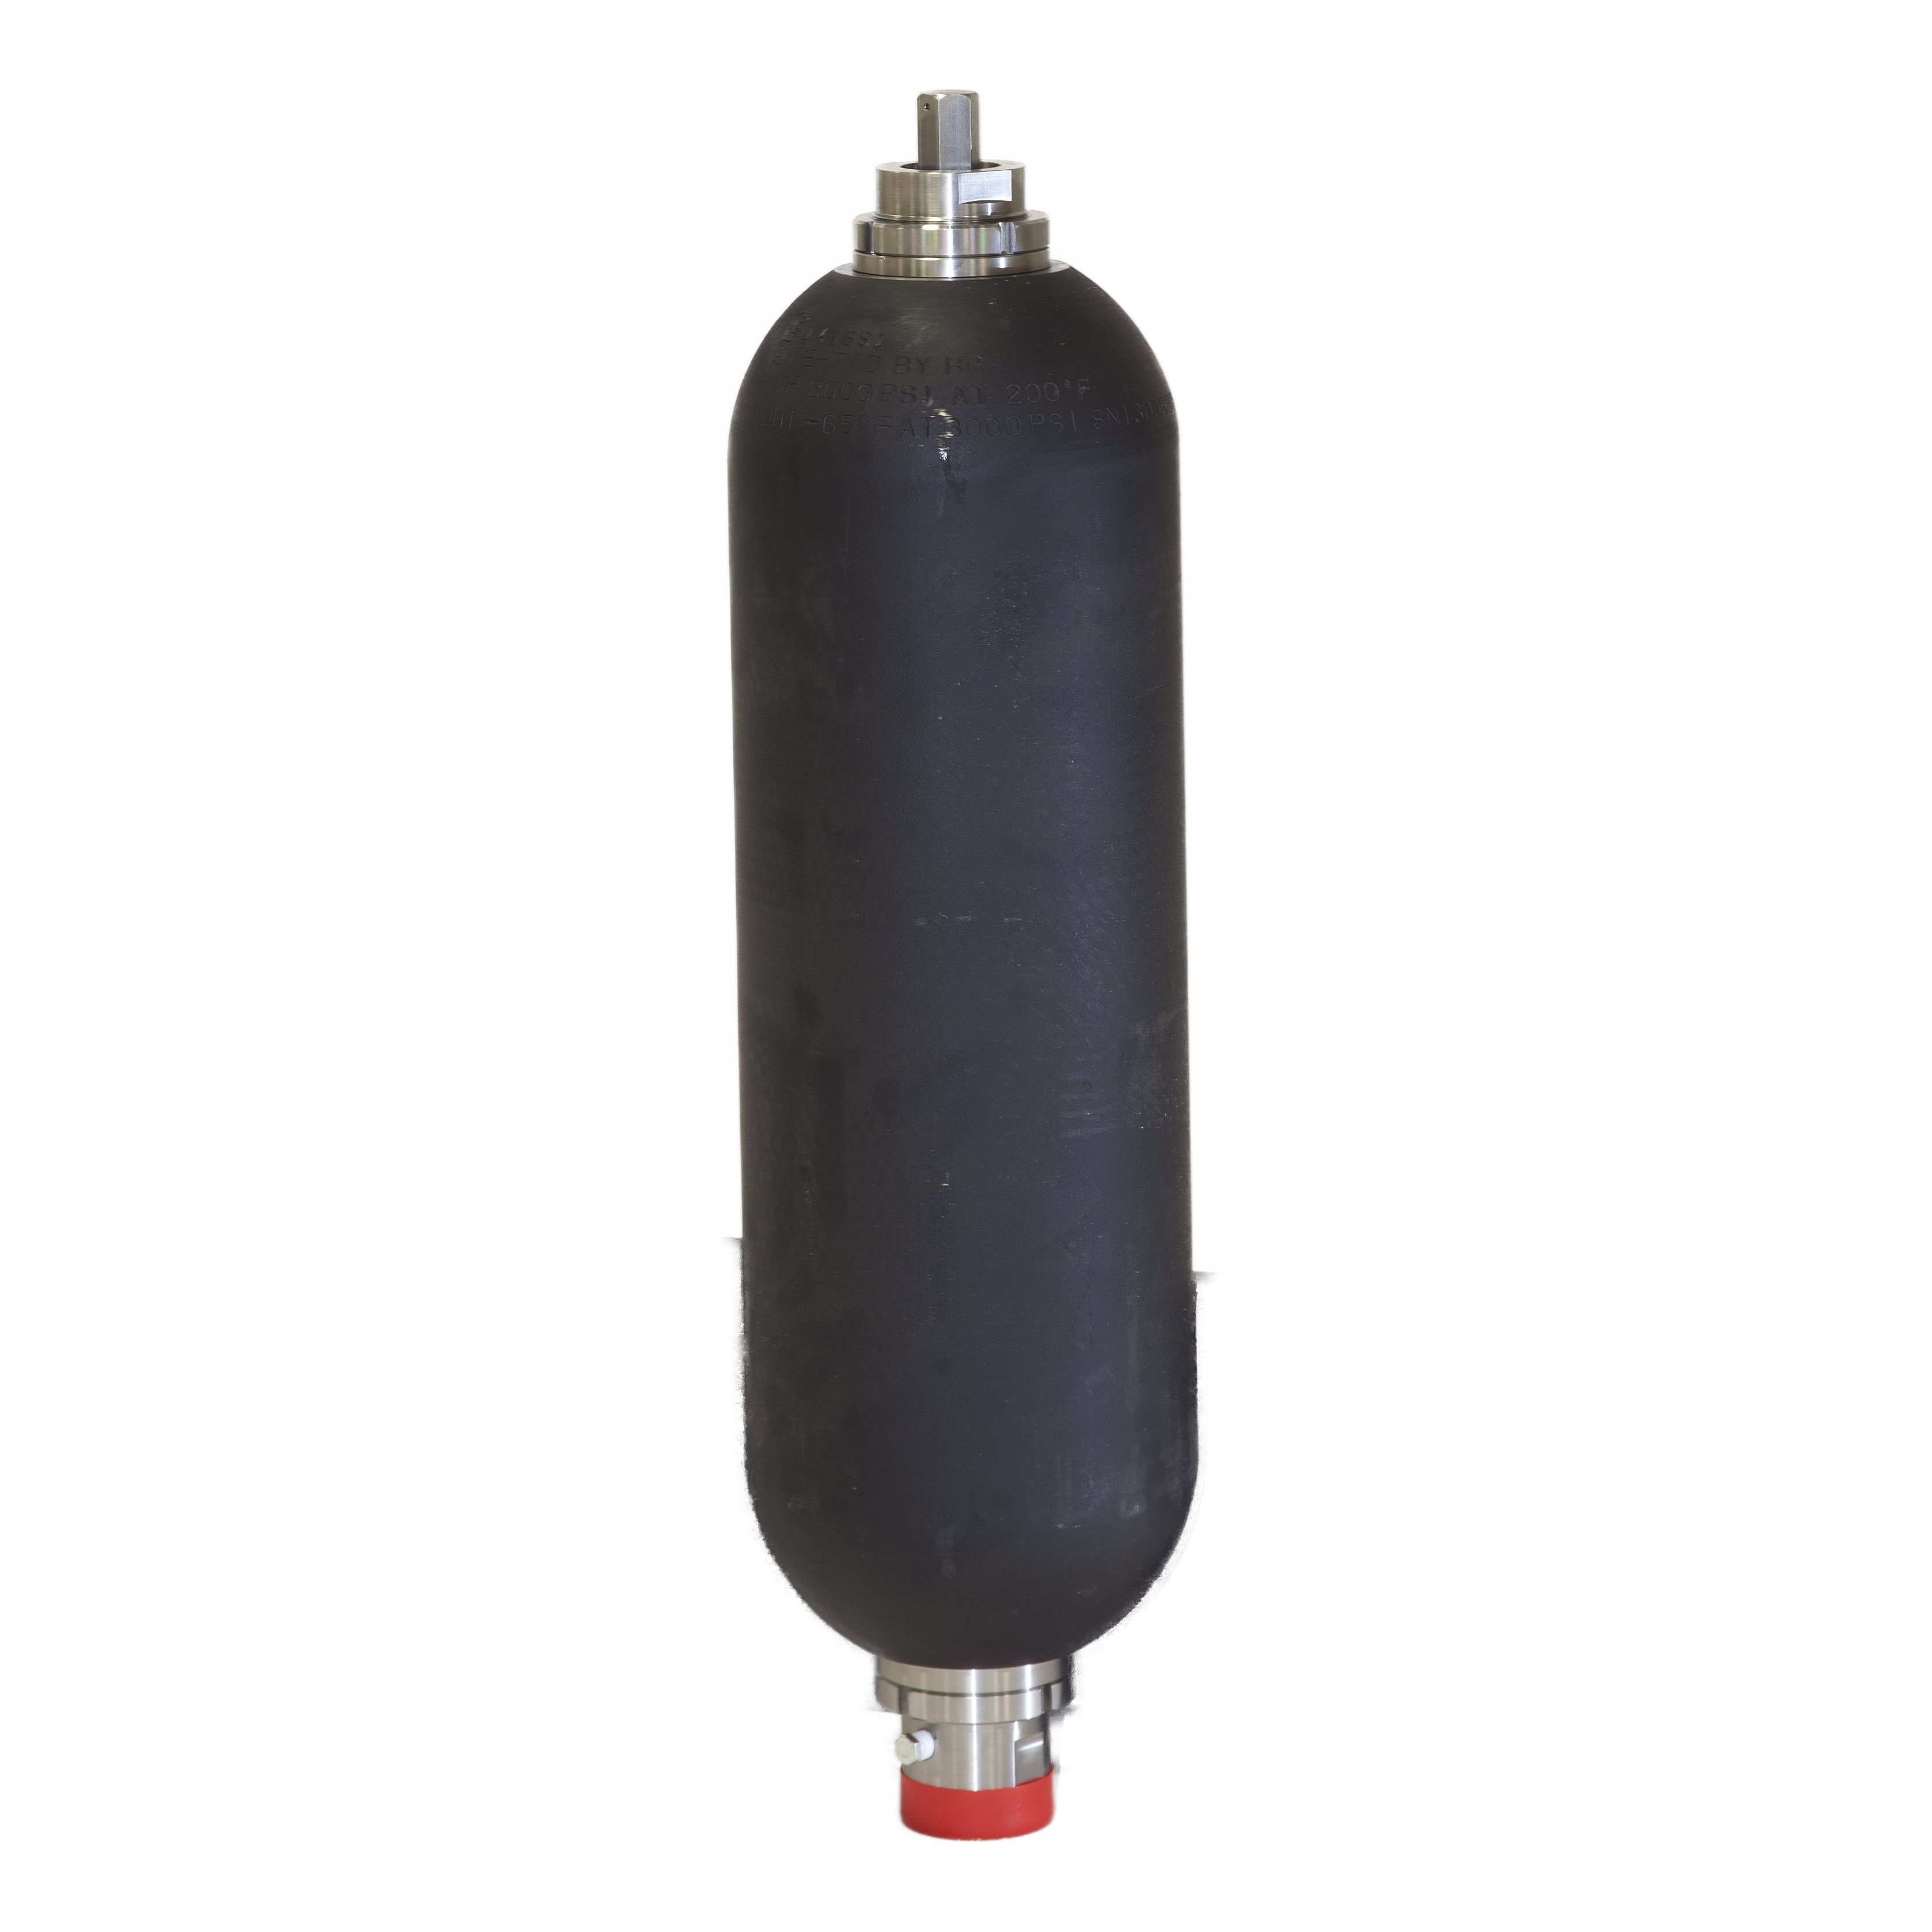 GB42-03-NE-N-O-1-A : SFP Gas Bottles 3000psi, 3000psi, 11 Gallon (42 Liter), 1.25" NPT